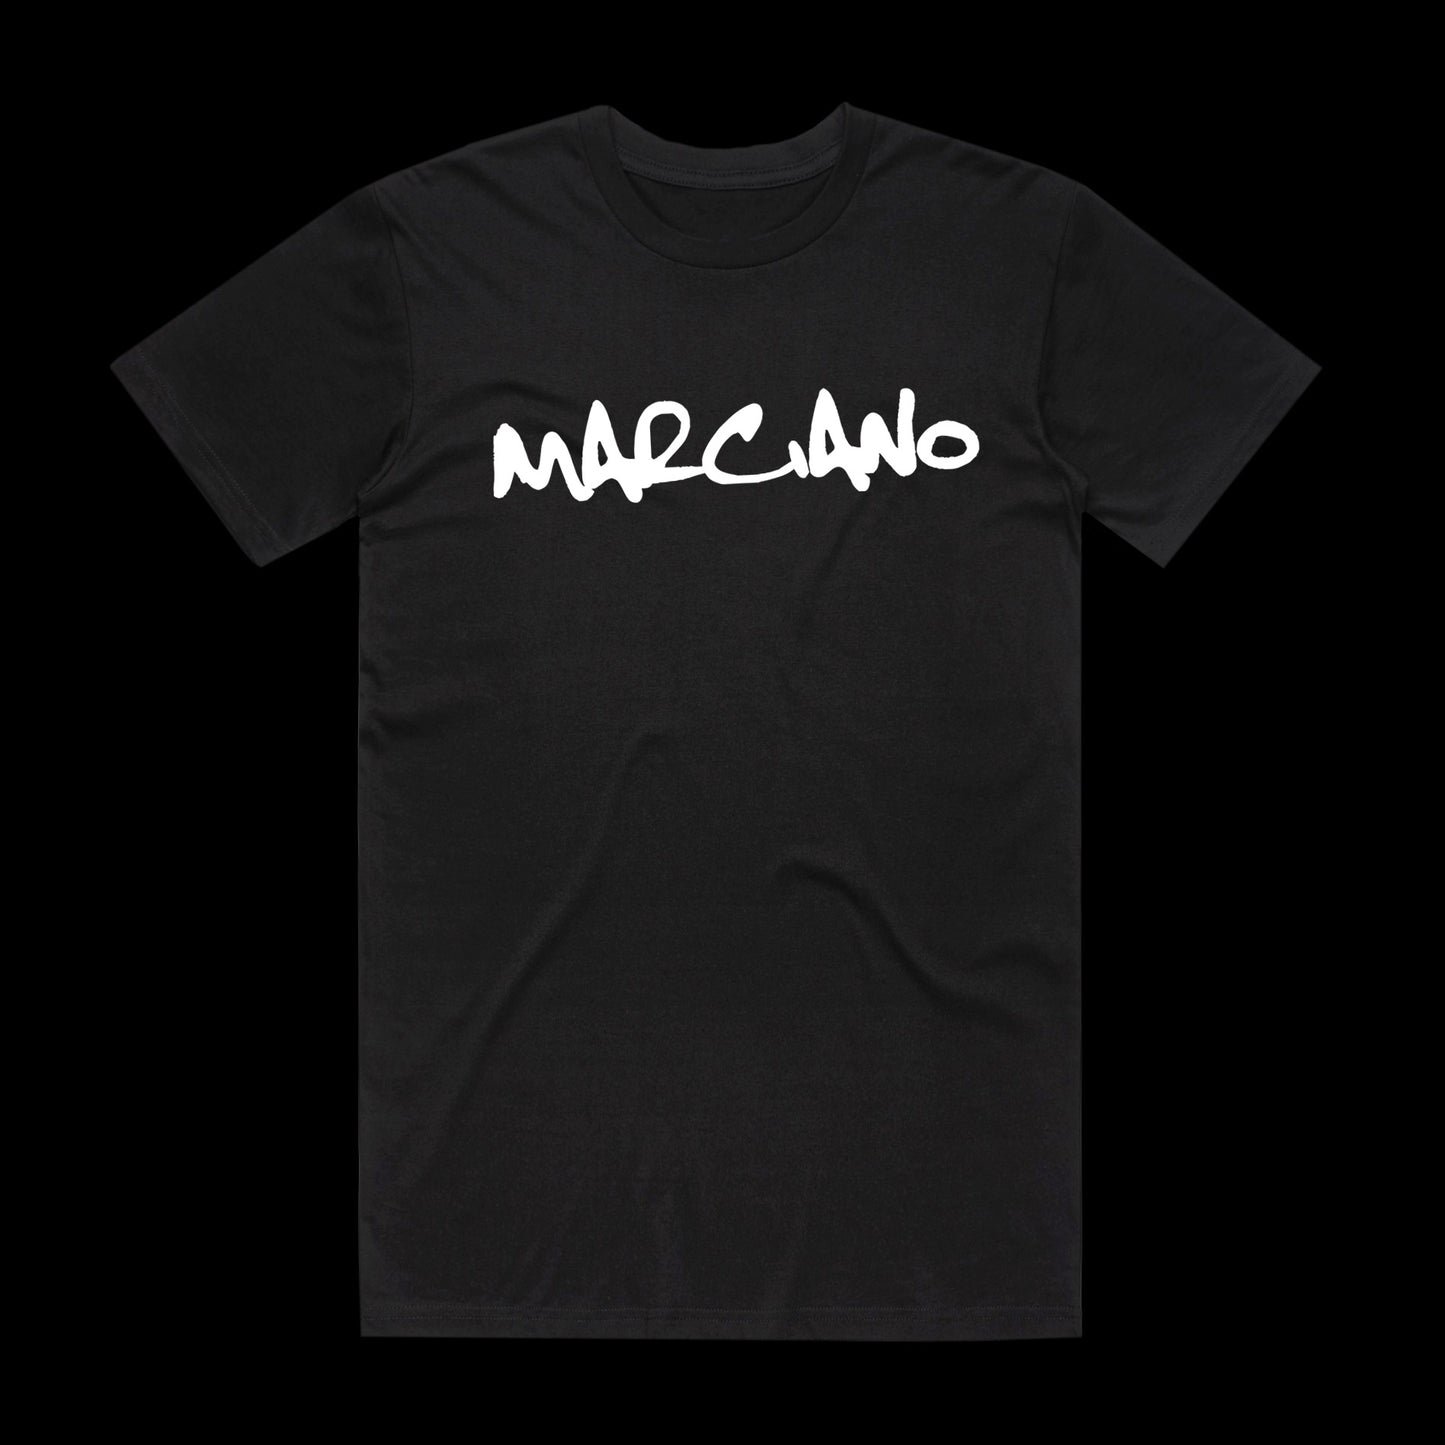 Marciano (Black T-Shirt)